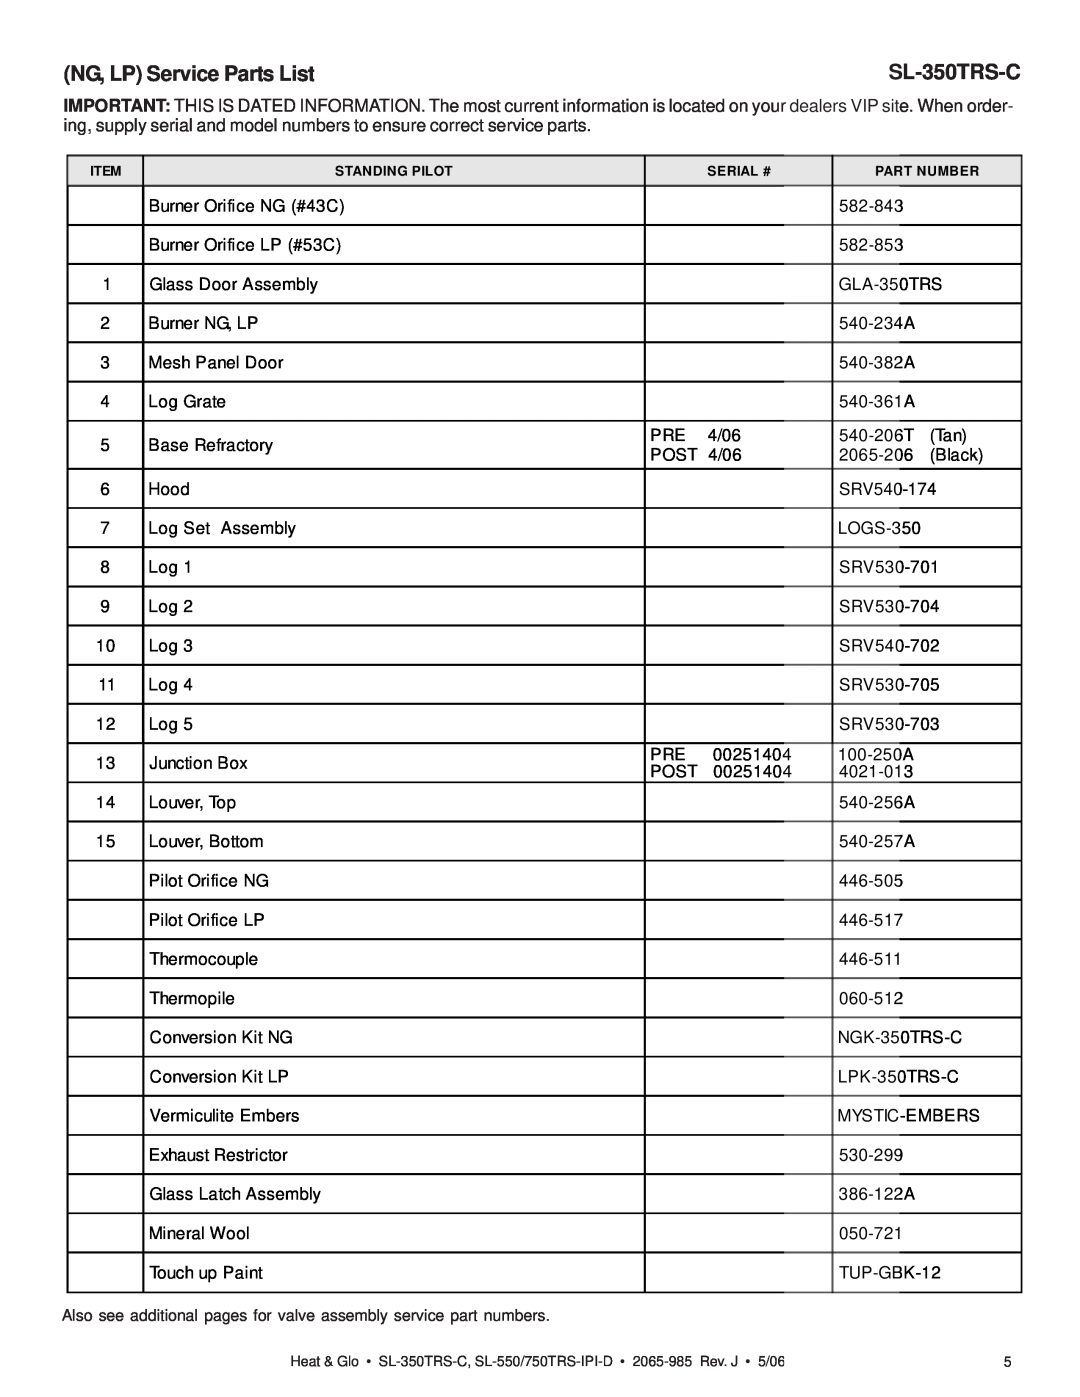 Heat & Glo LifeStyle SL-750TRS-IPI-D owner manual NG, LP Service Parts List, SL-350TRS-C 